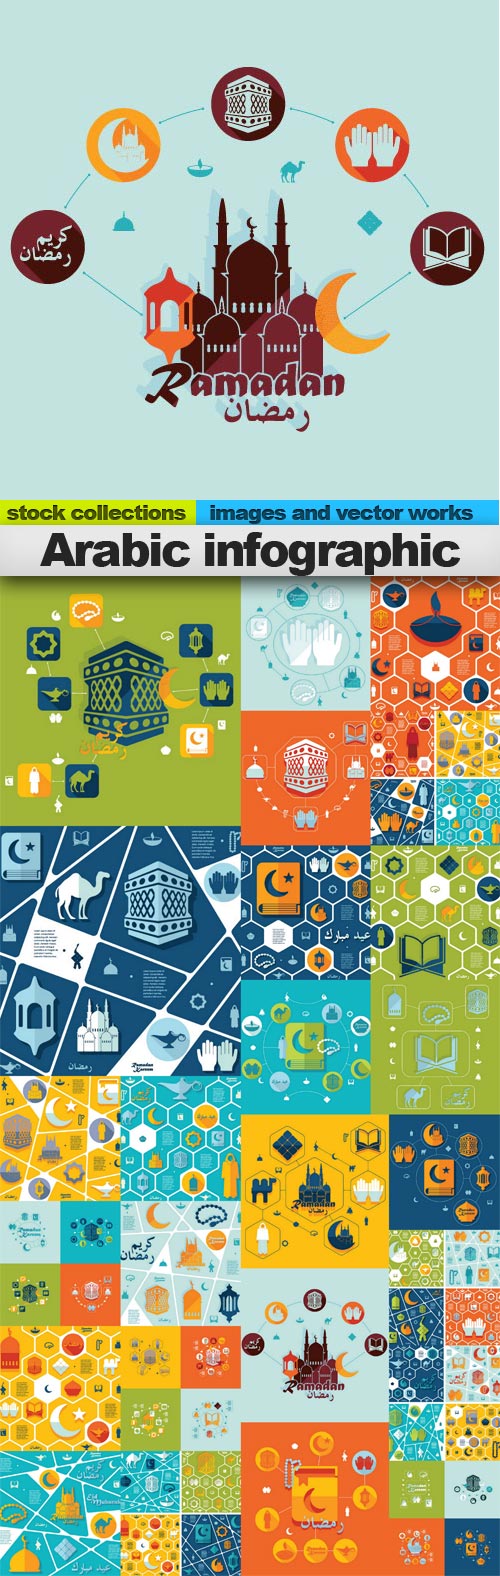 Arabic infographic 25xEPS